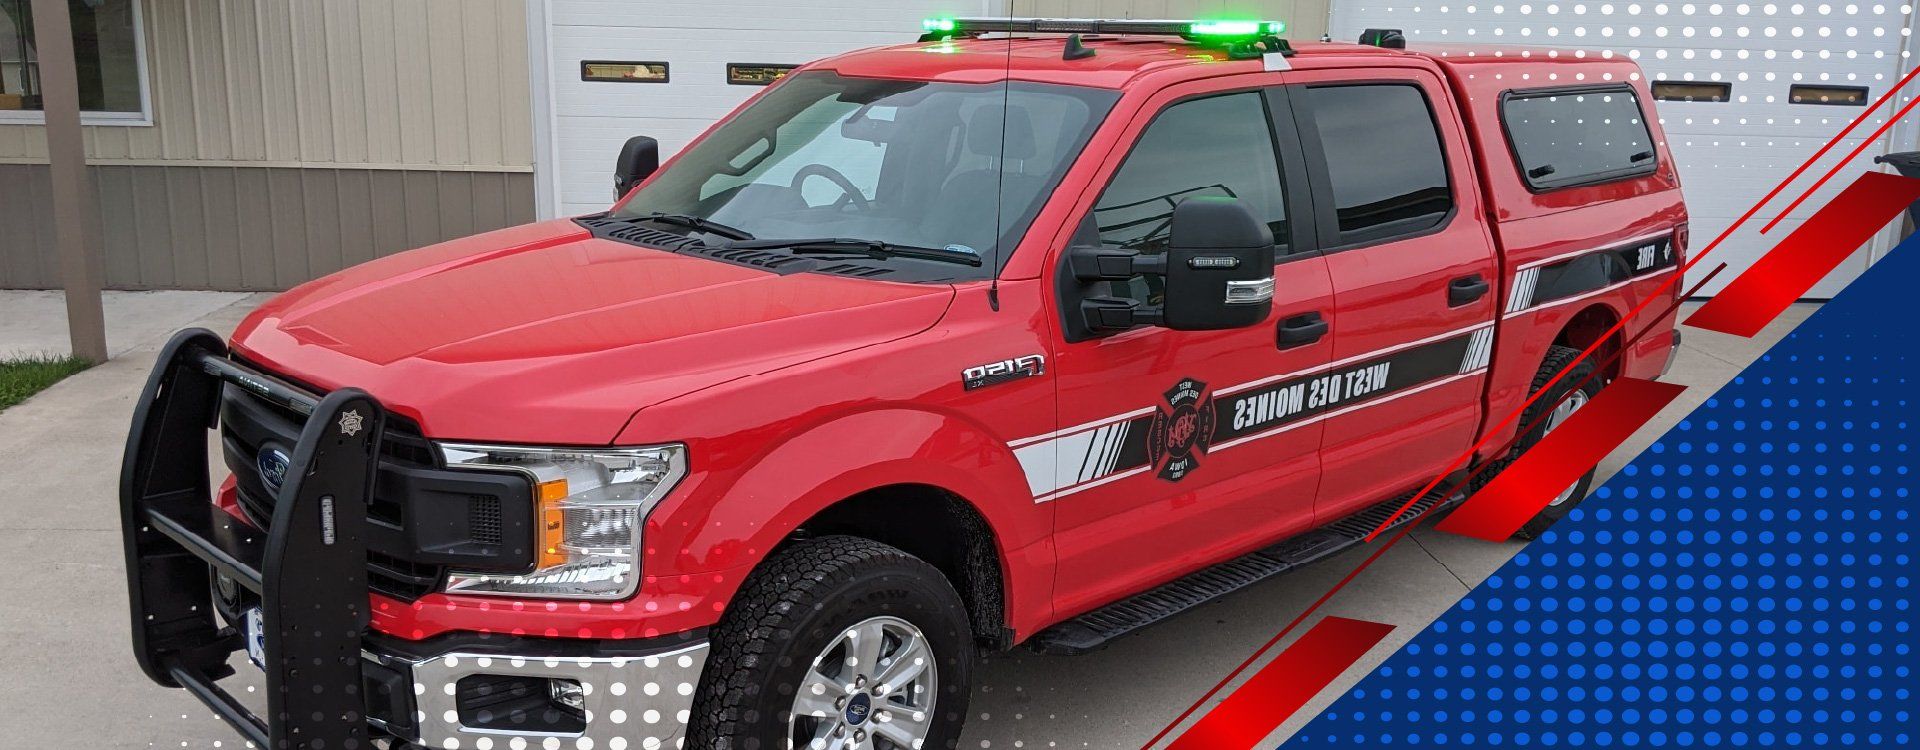 Stivers Midwest Pro Upfitters Ford F-150 fire vehicle upfit